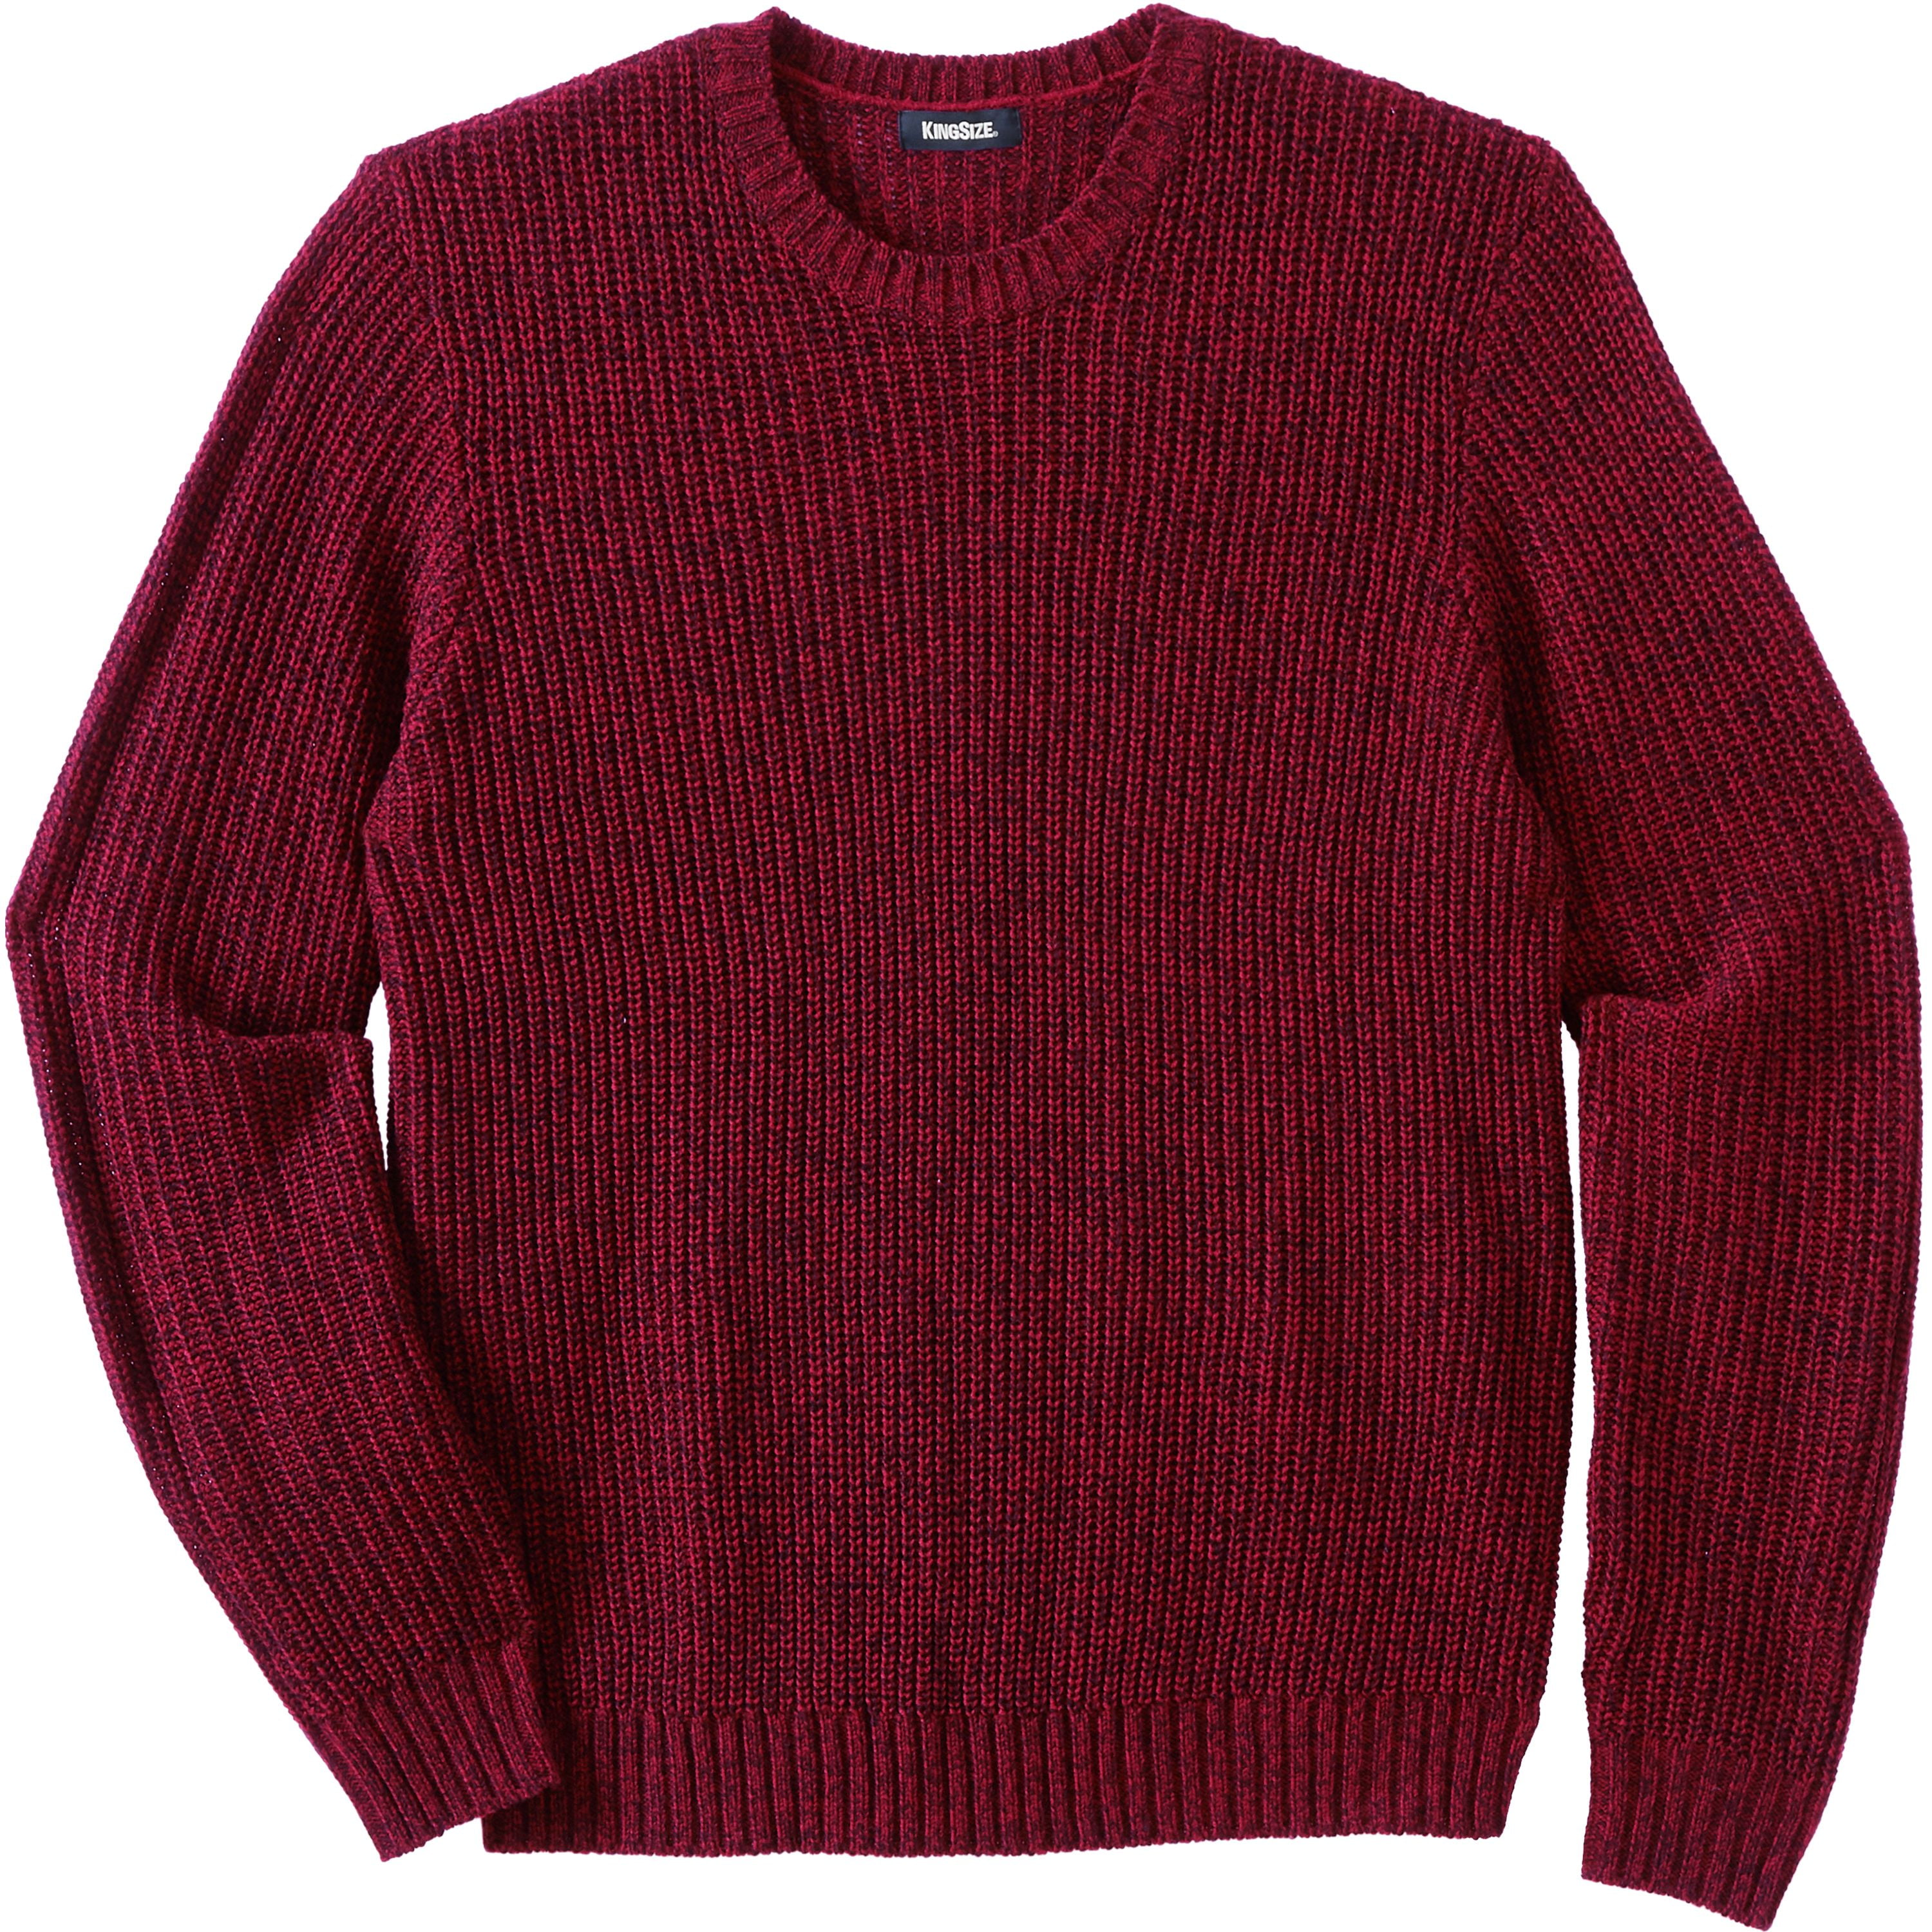 KingSize Mens Big /& Tall Shaker Knit Crewneck Sweater